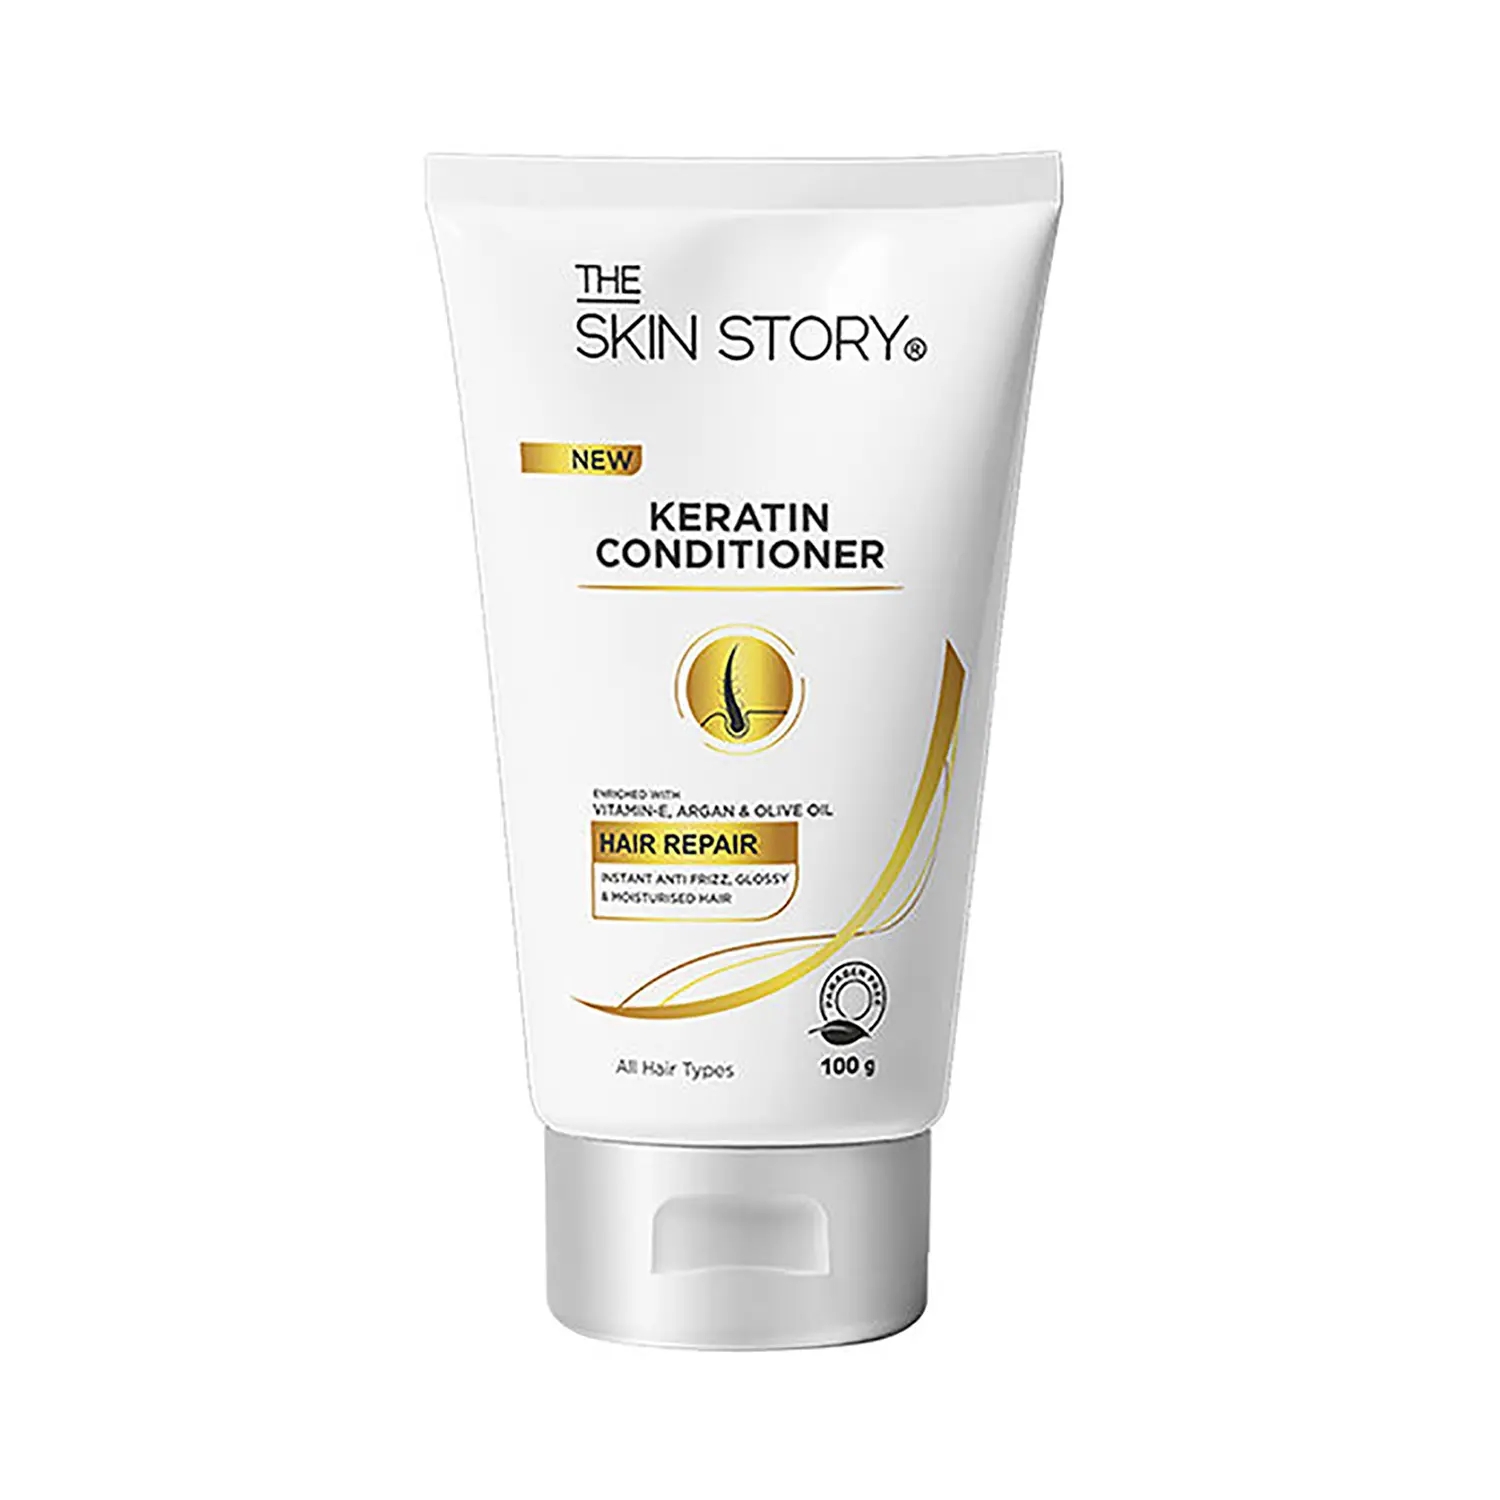 The Skin Story | The Skin Story New Keratin Hair Repair Conditioner (100g)